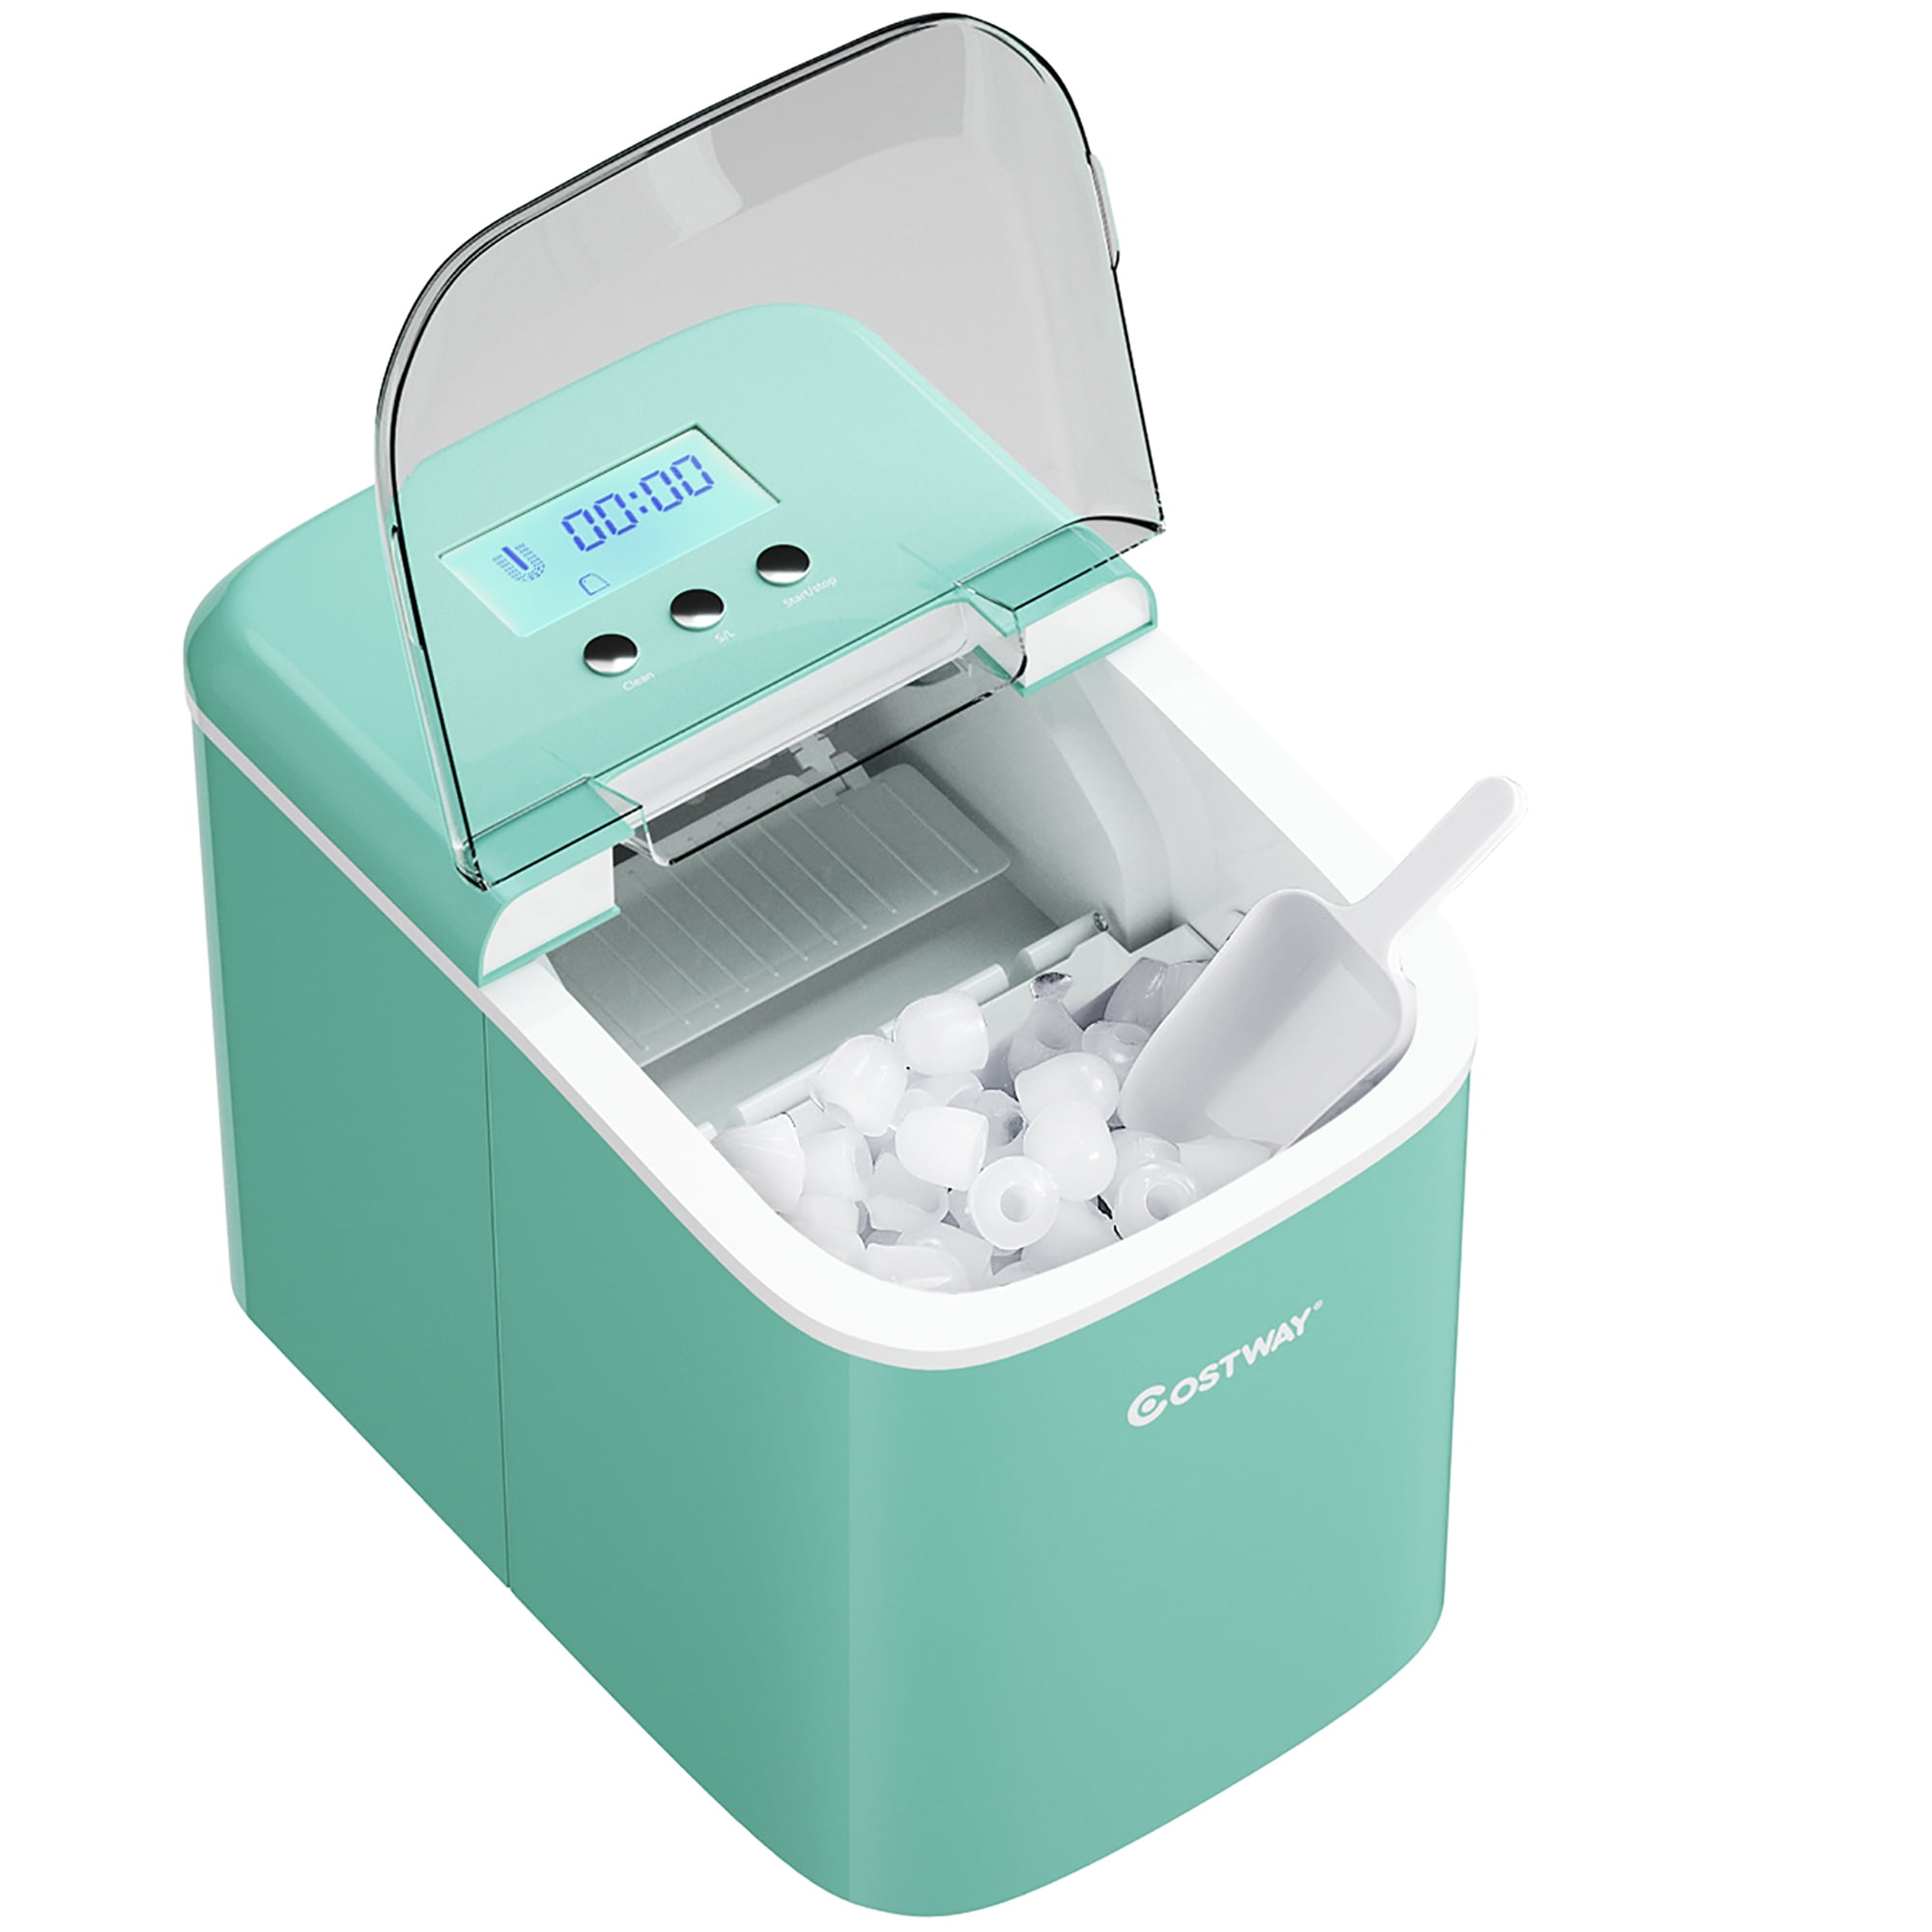 Costway Portable Countertop Ice Maker Machine 44Lbs/24H Self-Clean w/Scoop  Mint Green, 14.5''x10.5''x13.5'' - Foods Co.